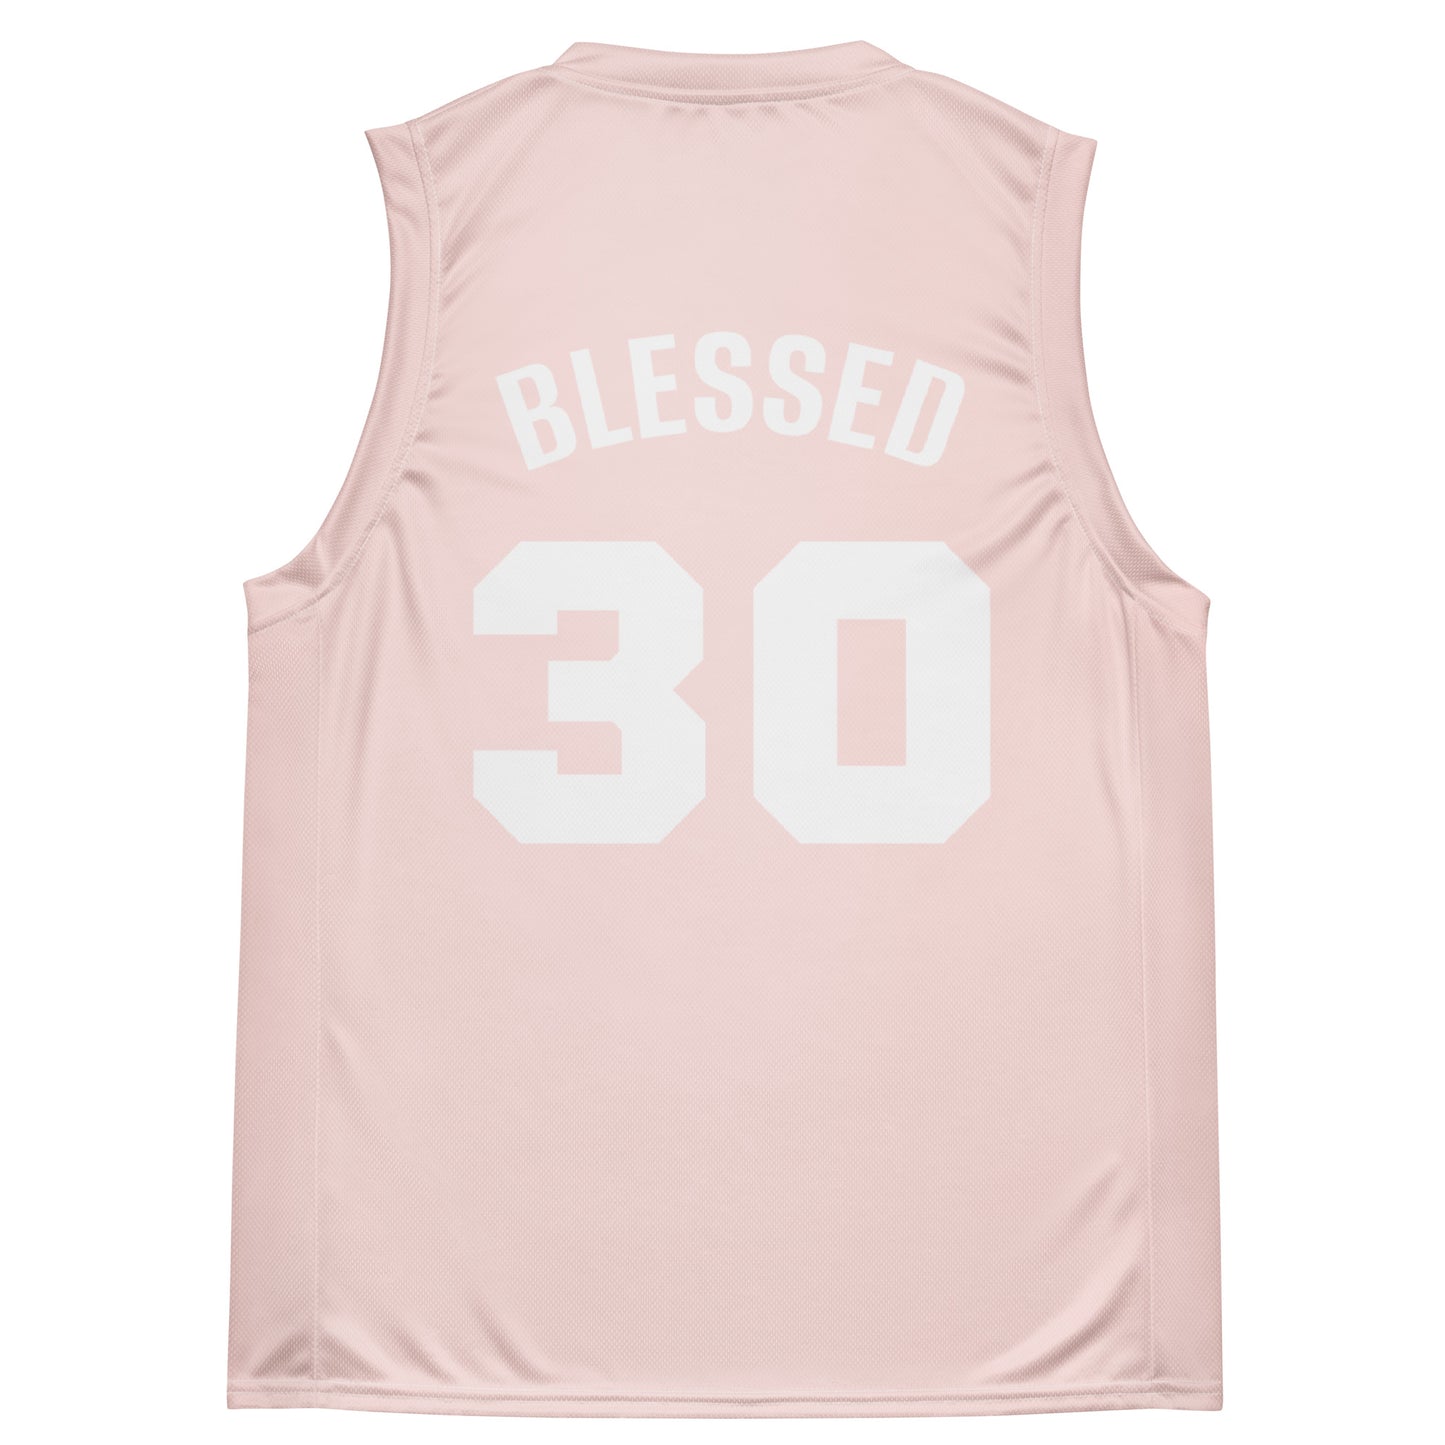 #30 BLESSED light salmon basketball jersey